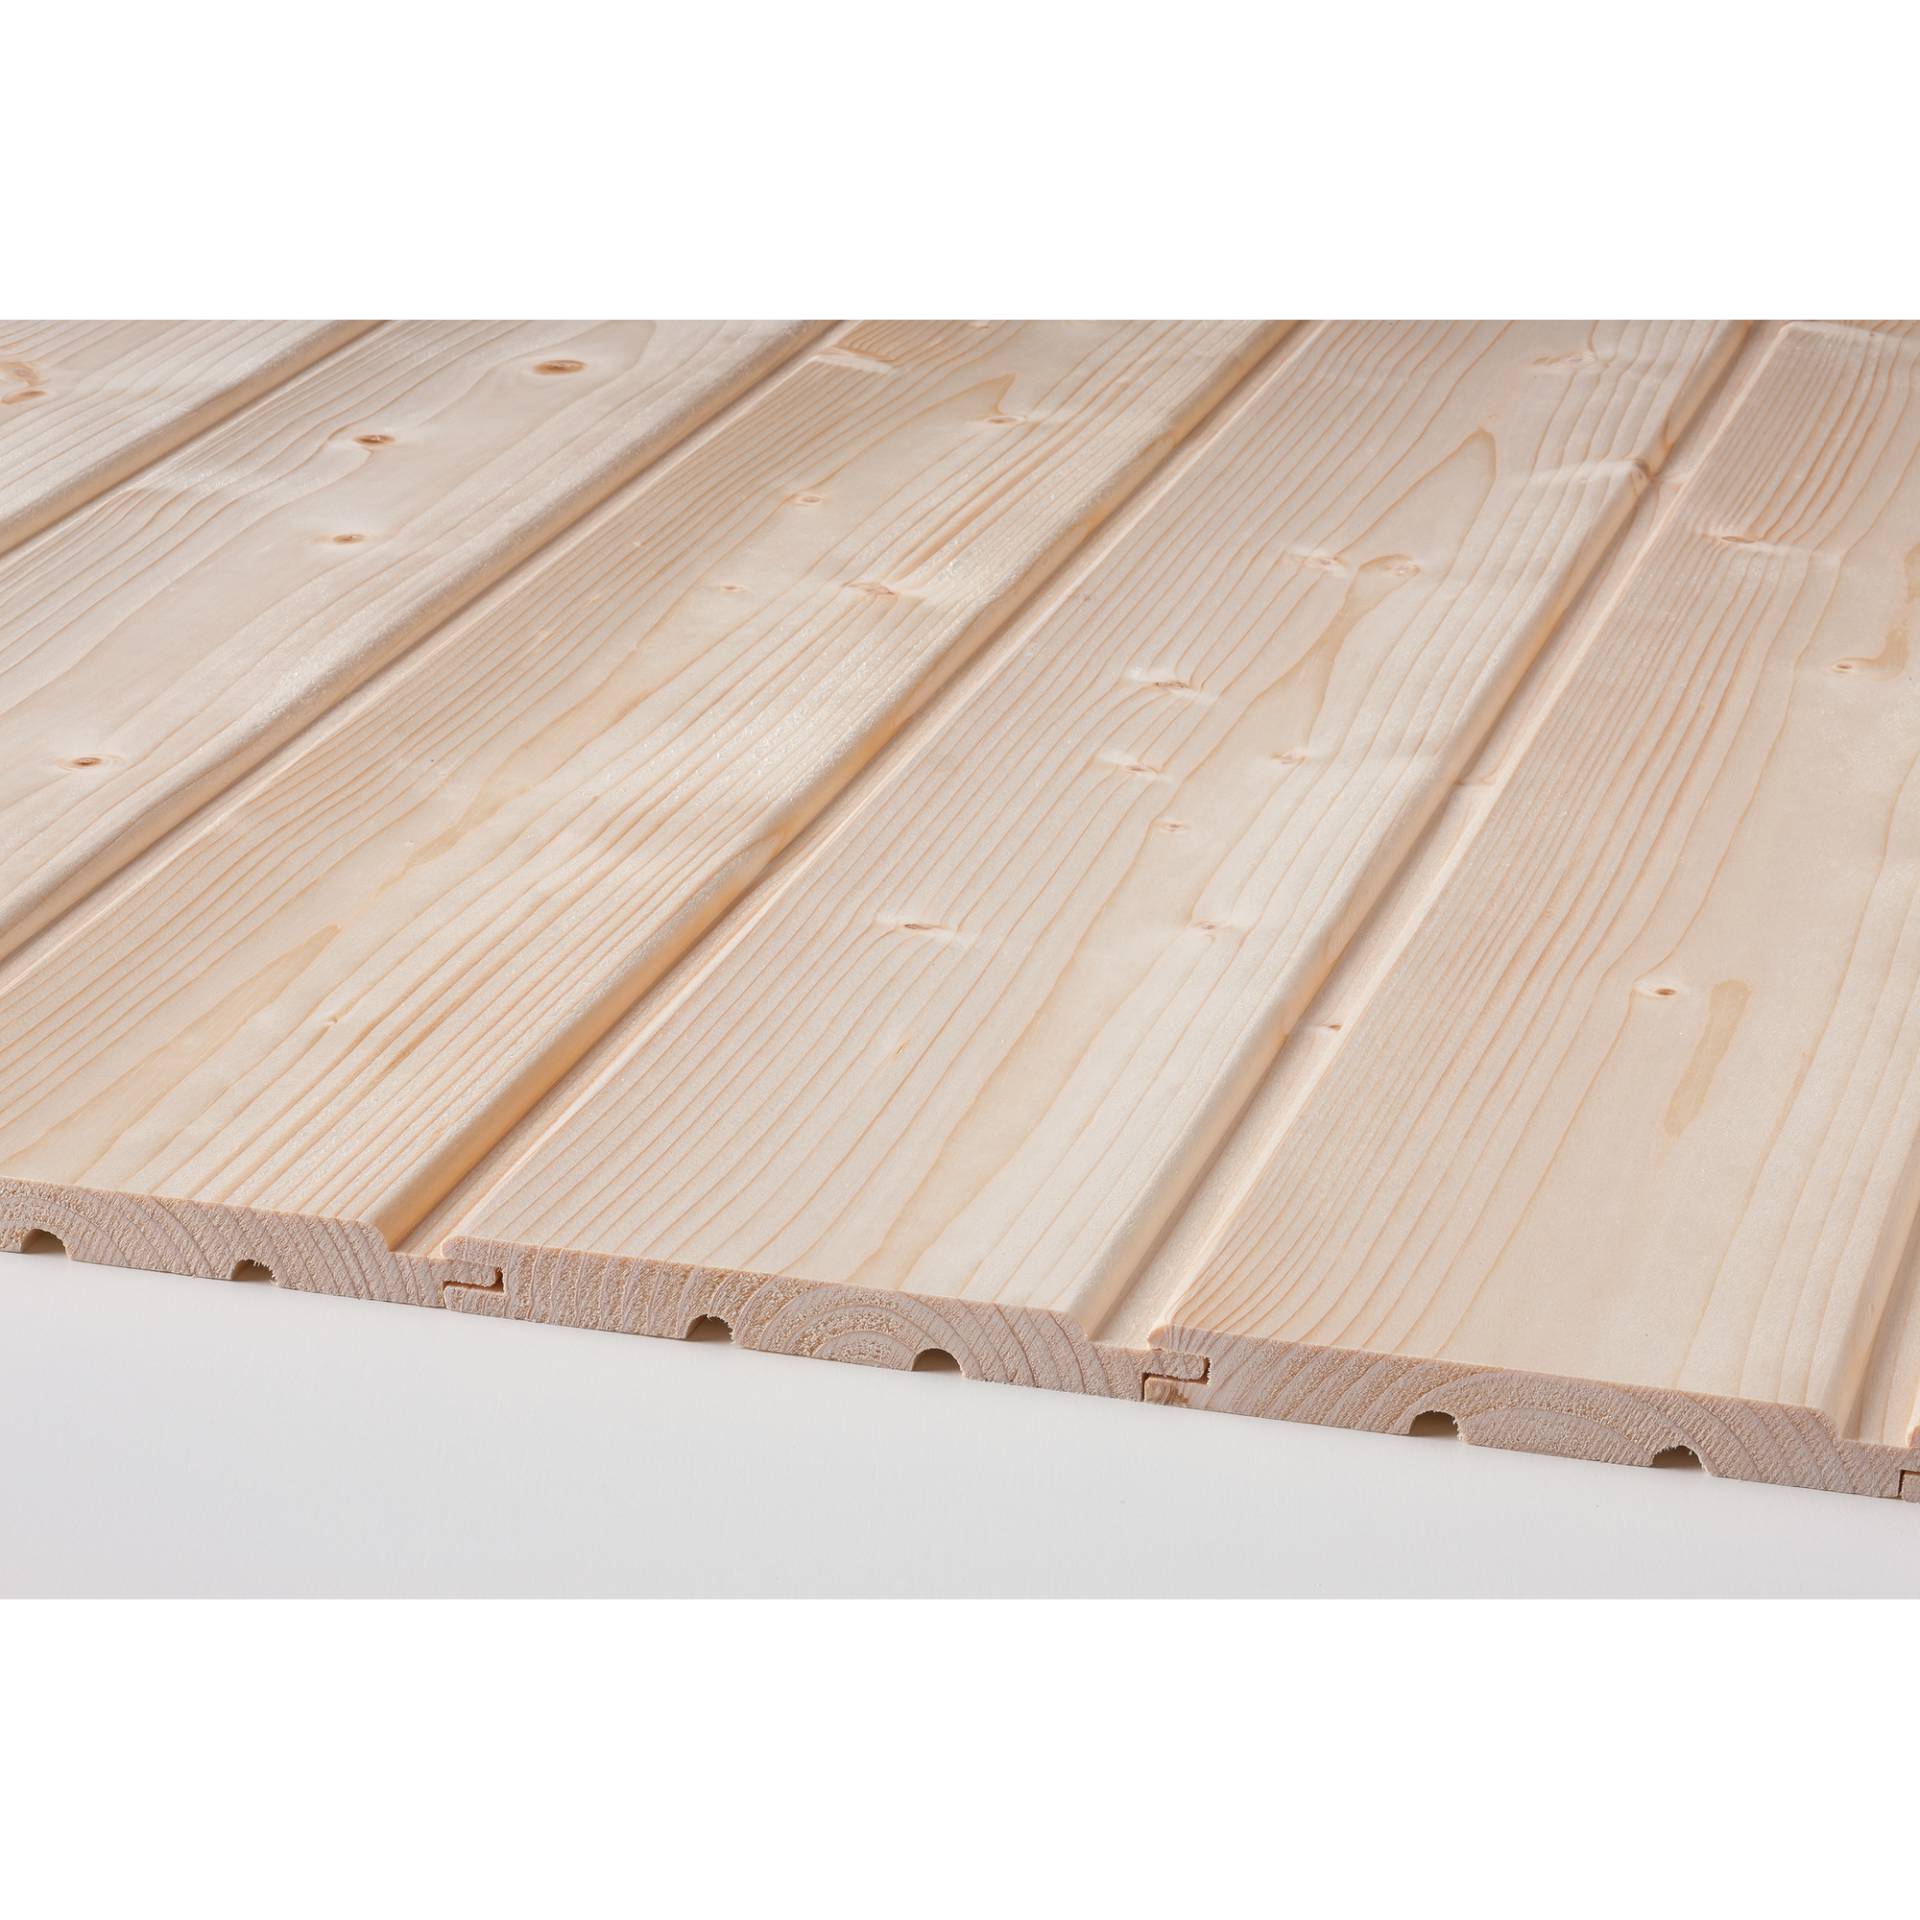 Klenk Holz Profilholz Fichte/Tanne gehobelt 12,5 x 96 x 2000 mm von Klenk Holz